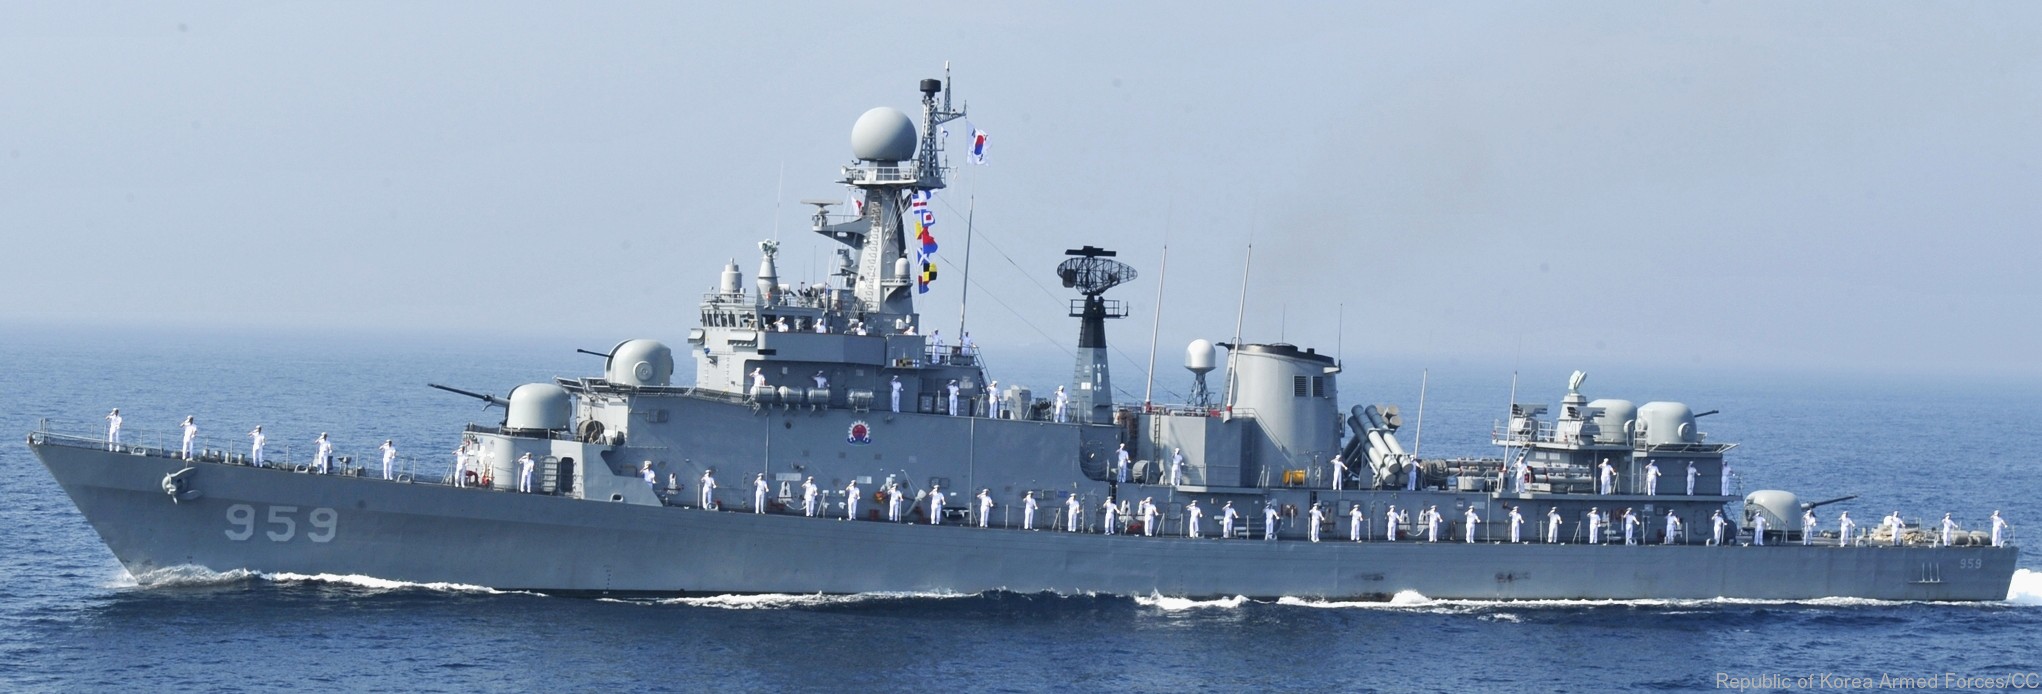 ff-959 roks busan ulsan class frigate republic of korea navy rokn 02